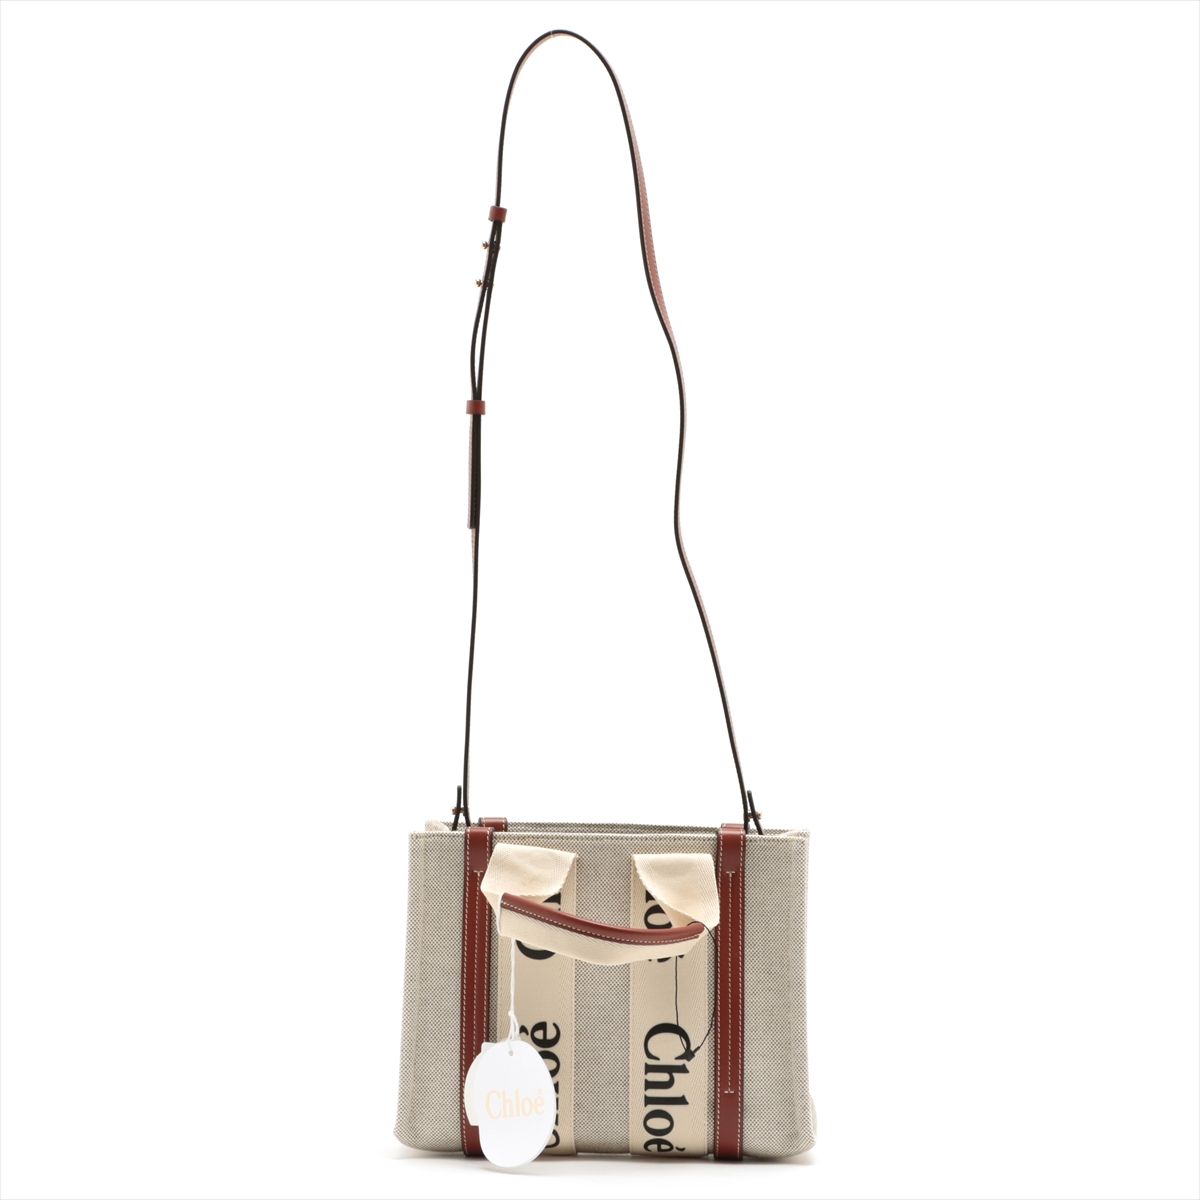 CHLOE Chloe Woody Tote Bag Small in Brown Leather & Linen - Vault 55